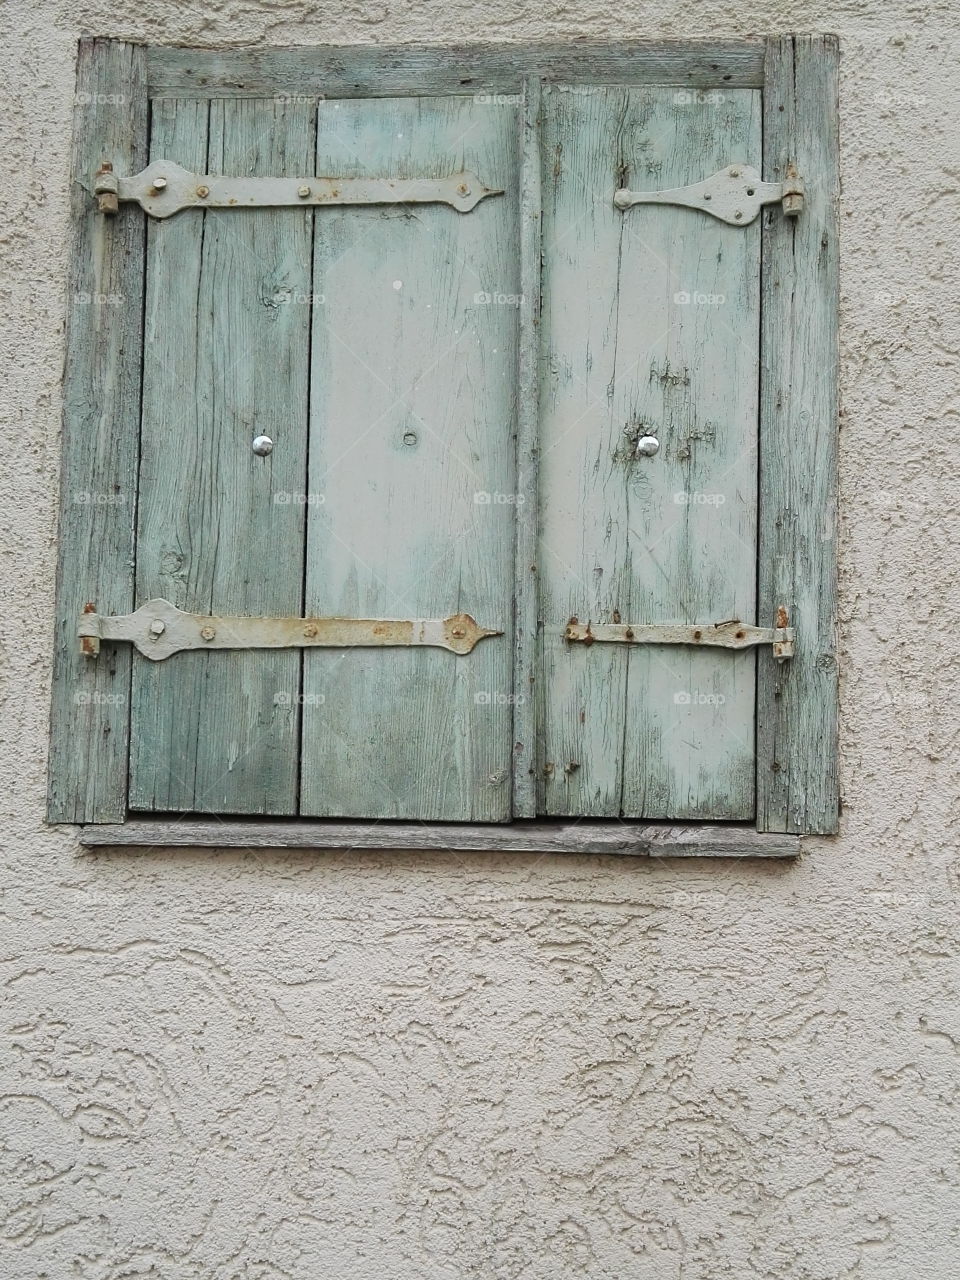 verry old vintage window shutter